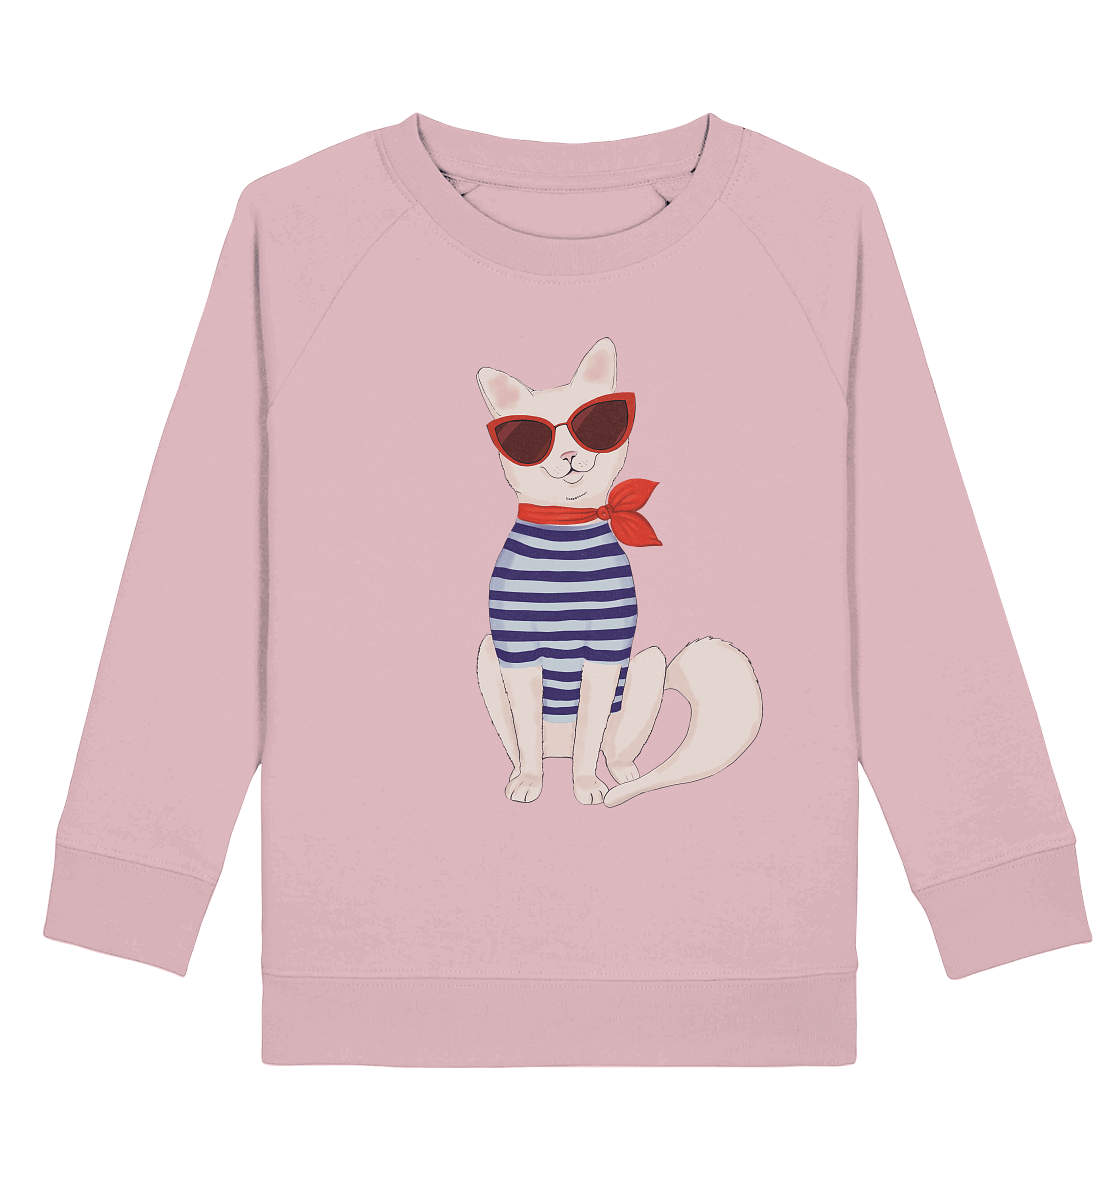 Katze Sweatshirt Fashion Katze in marinenhemd Katze mit roter Sonnenbrille